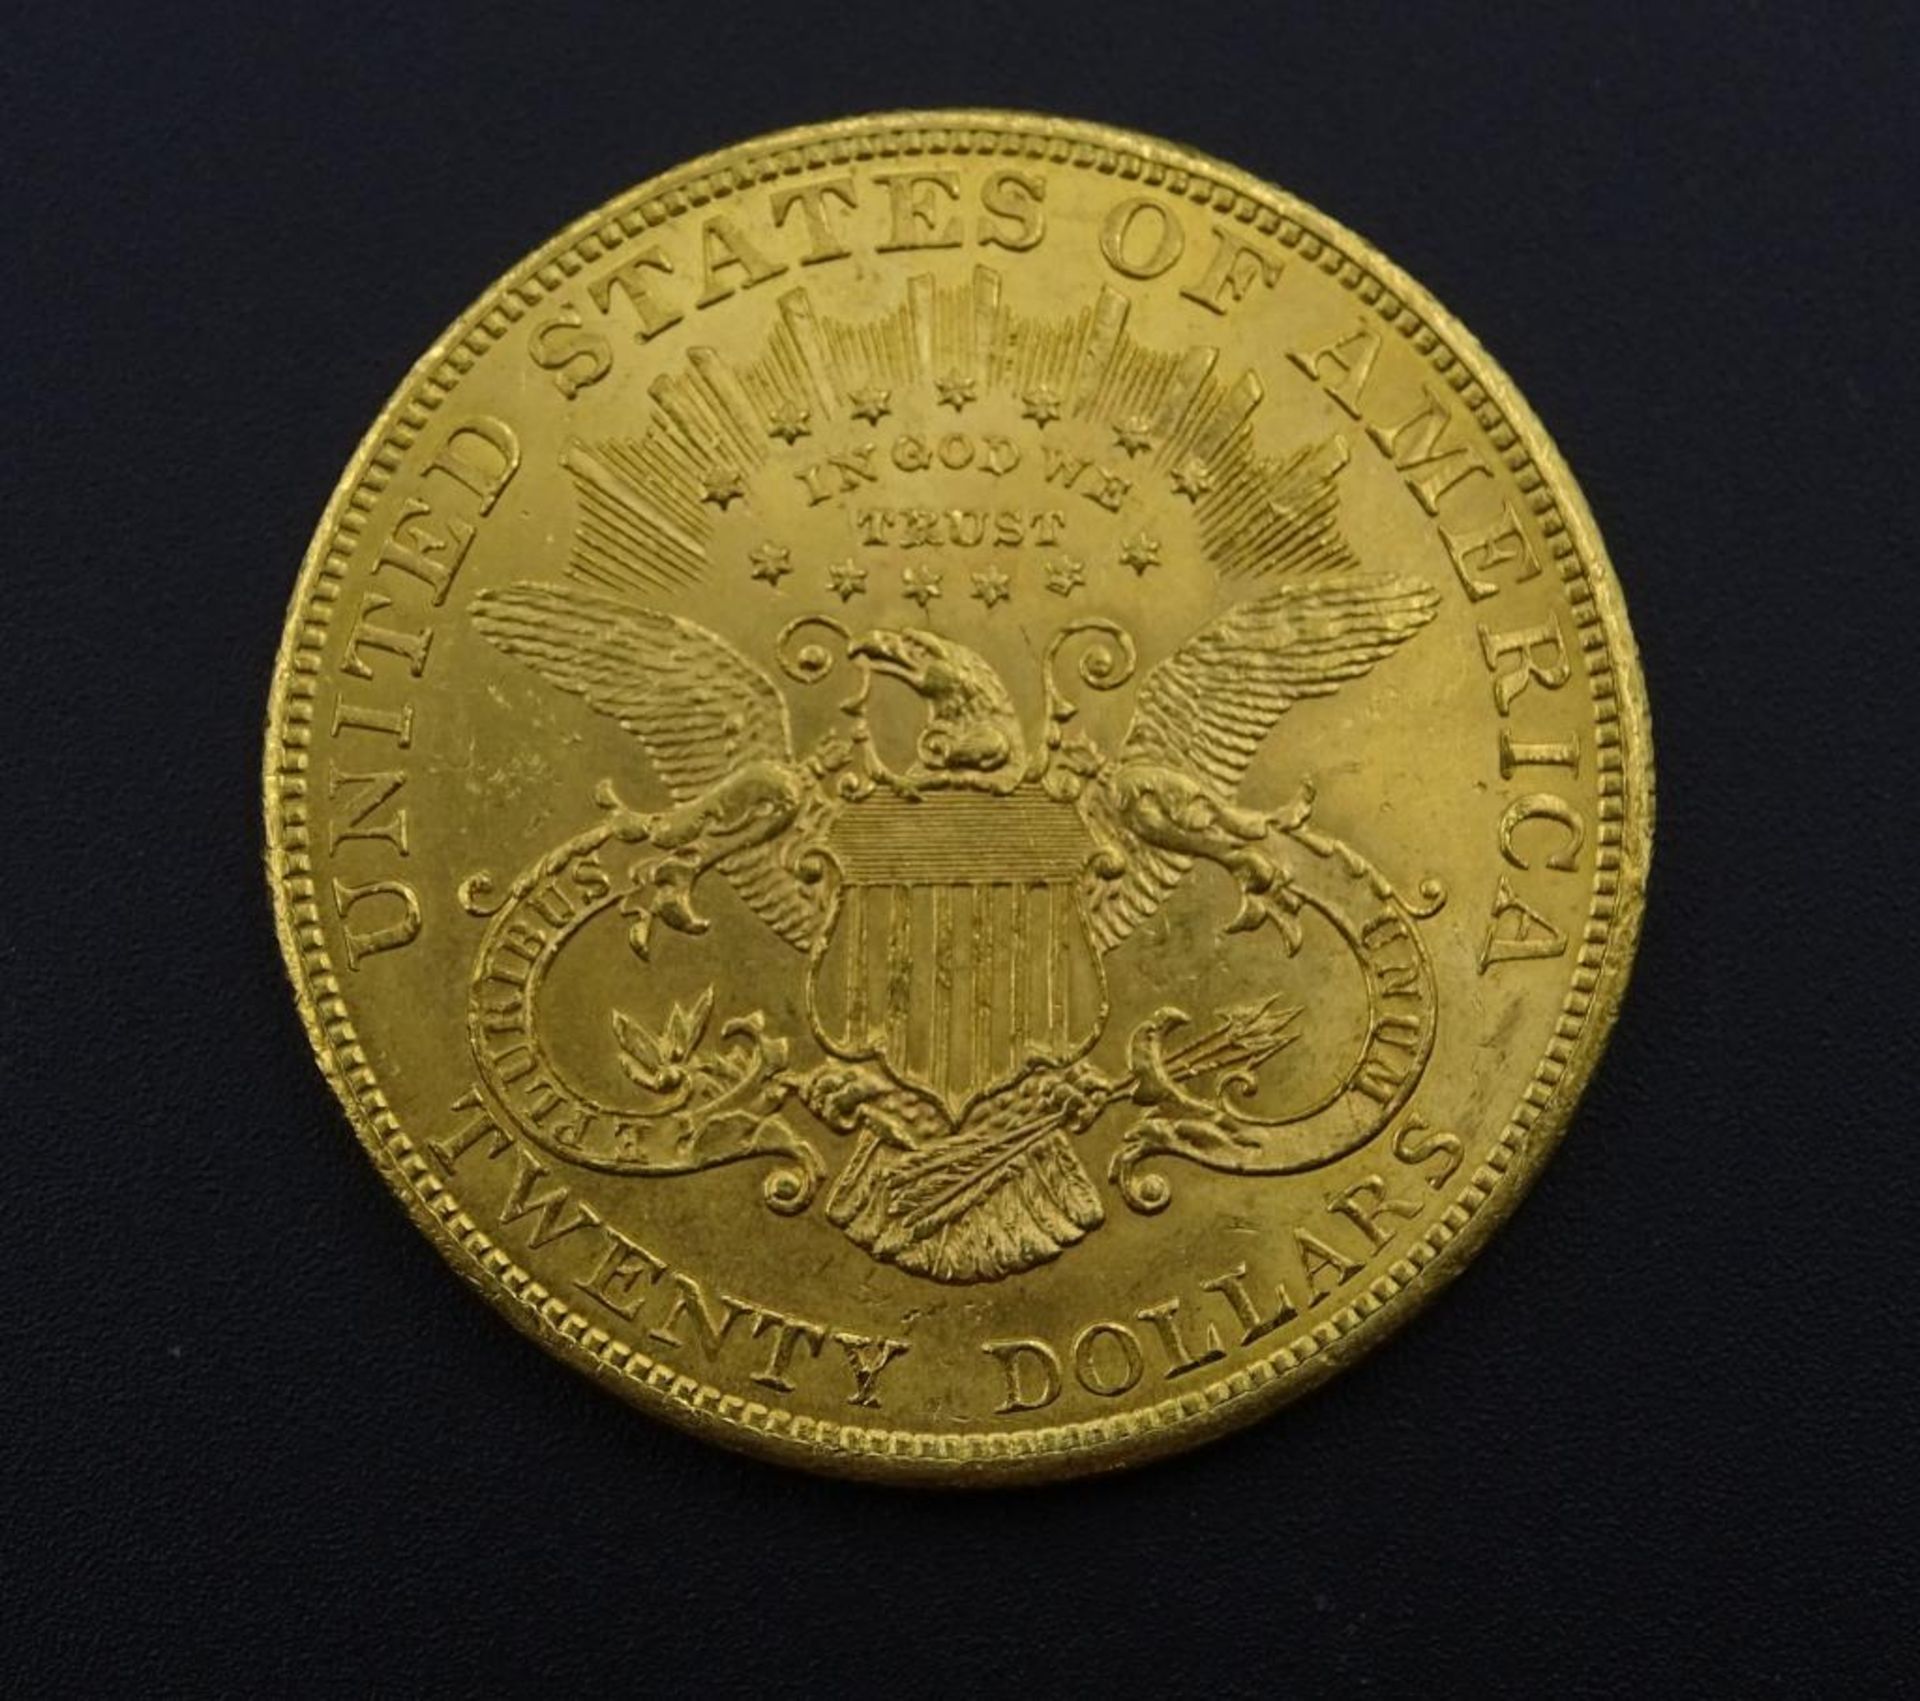 20 Dollars USA, 1904. Twenty Dollars, Goldmünze, 34,3mm, 33,3gr. - Bild 2 aus 2